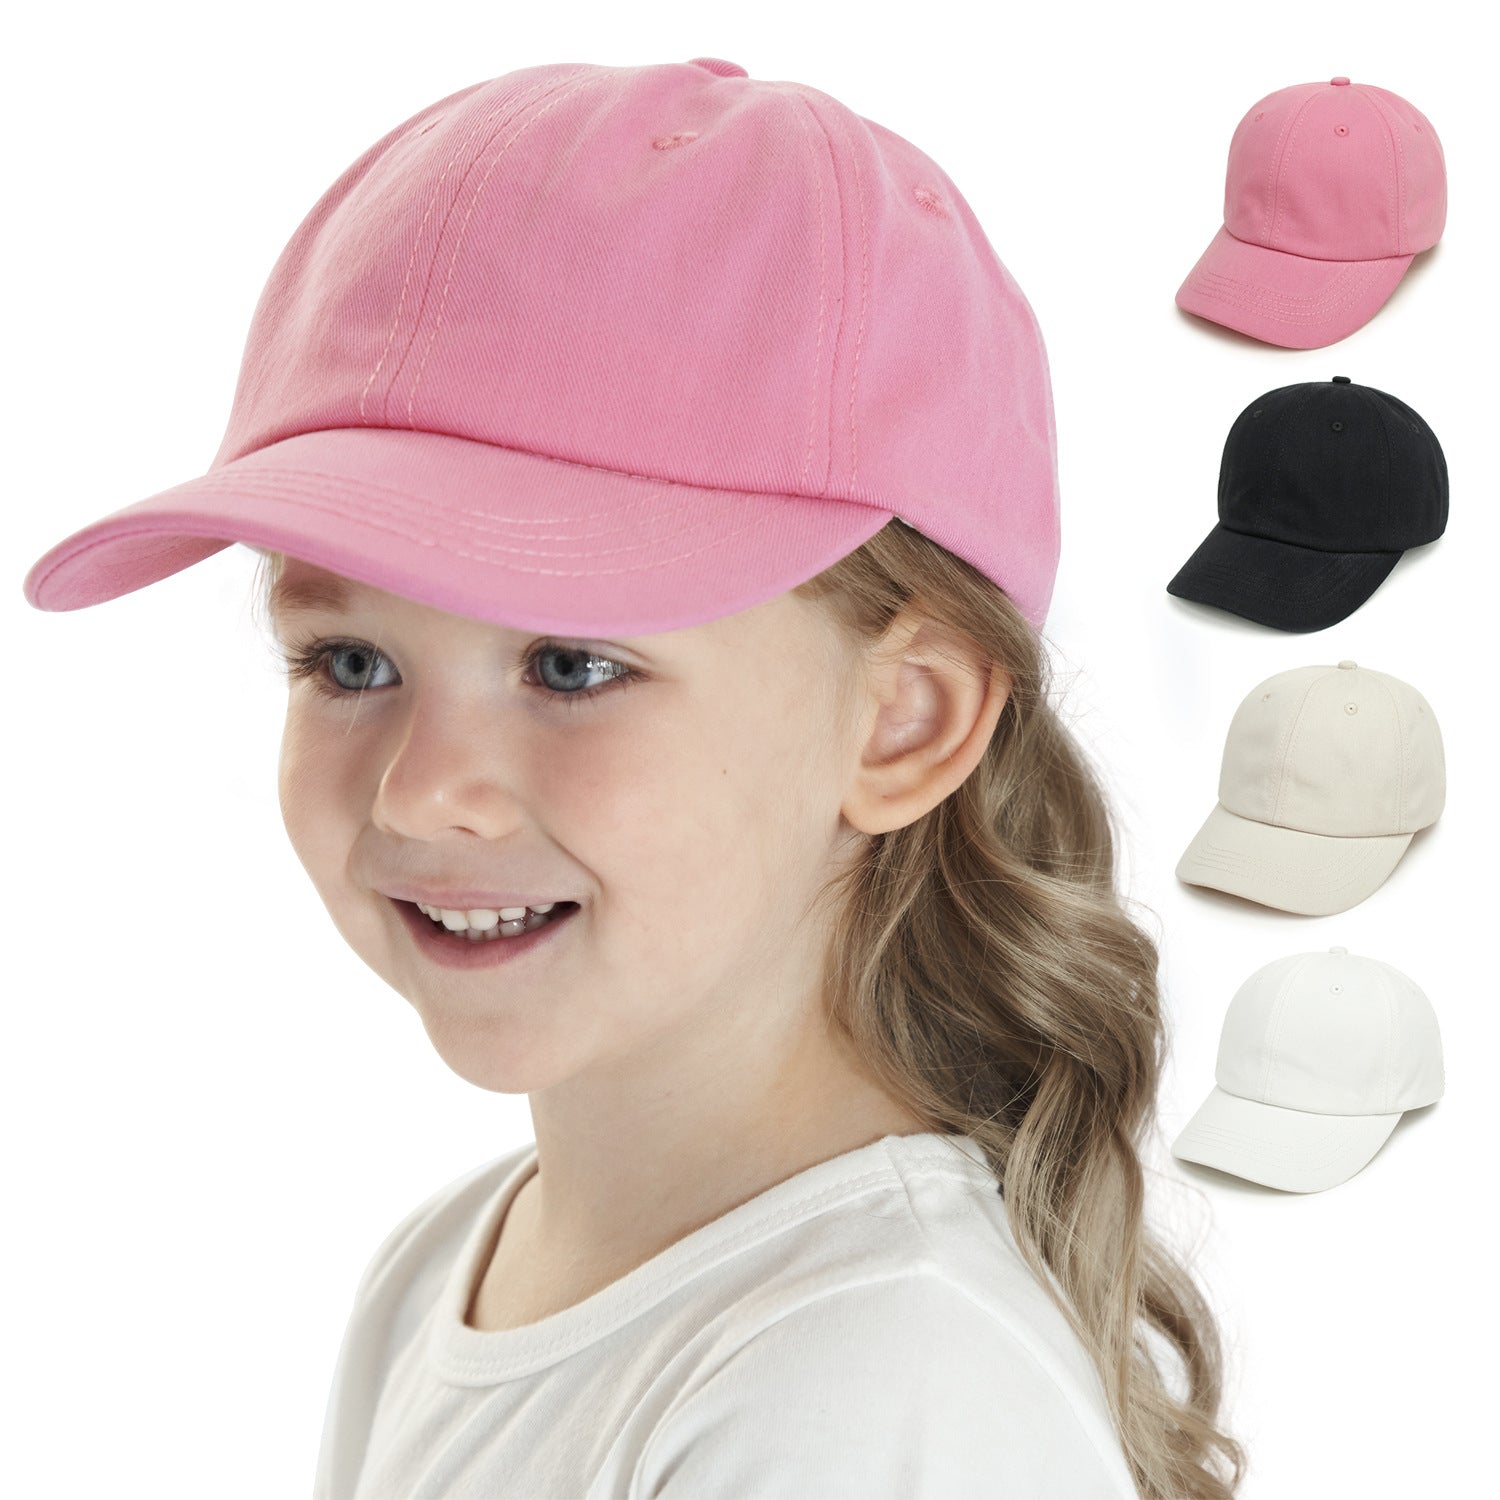 Spring Summer Kid Baby Baseball Cap Solid Color Cotton Casual Adjustable Sun Hat